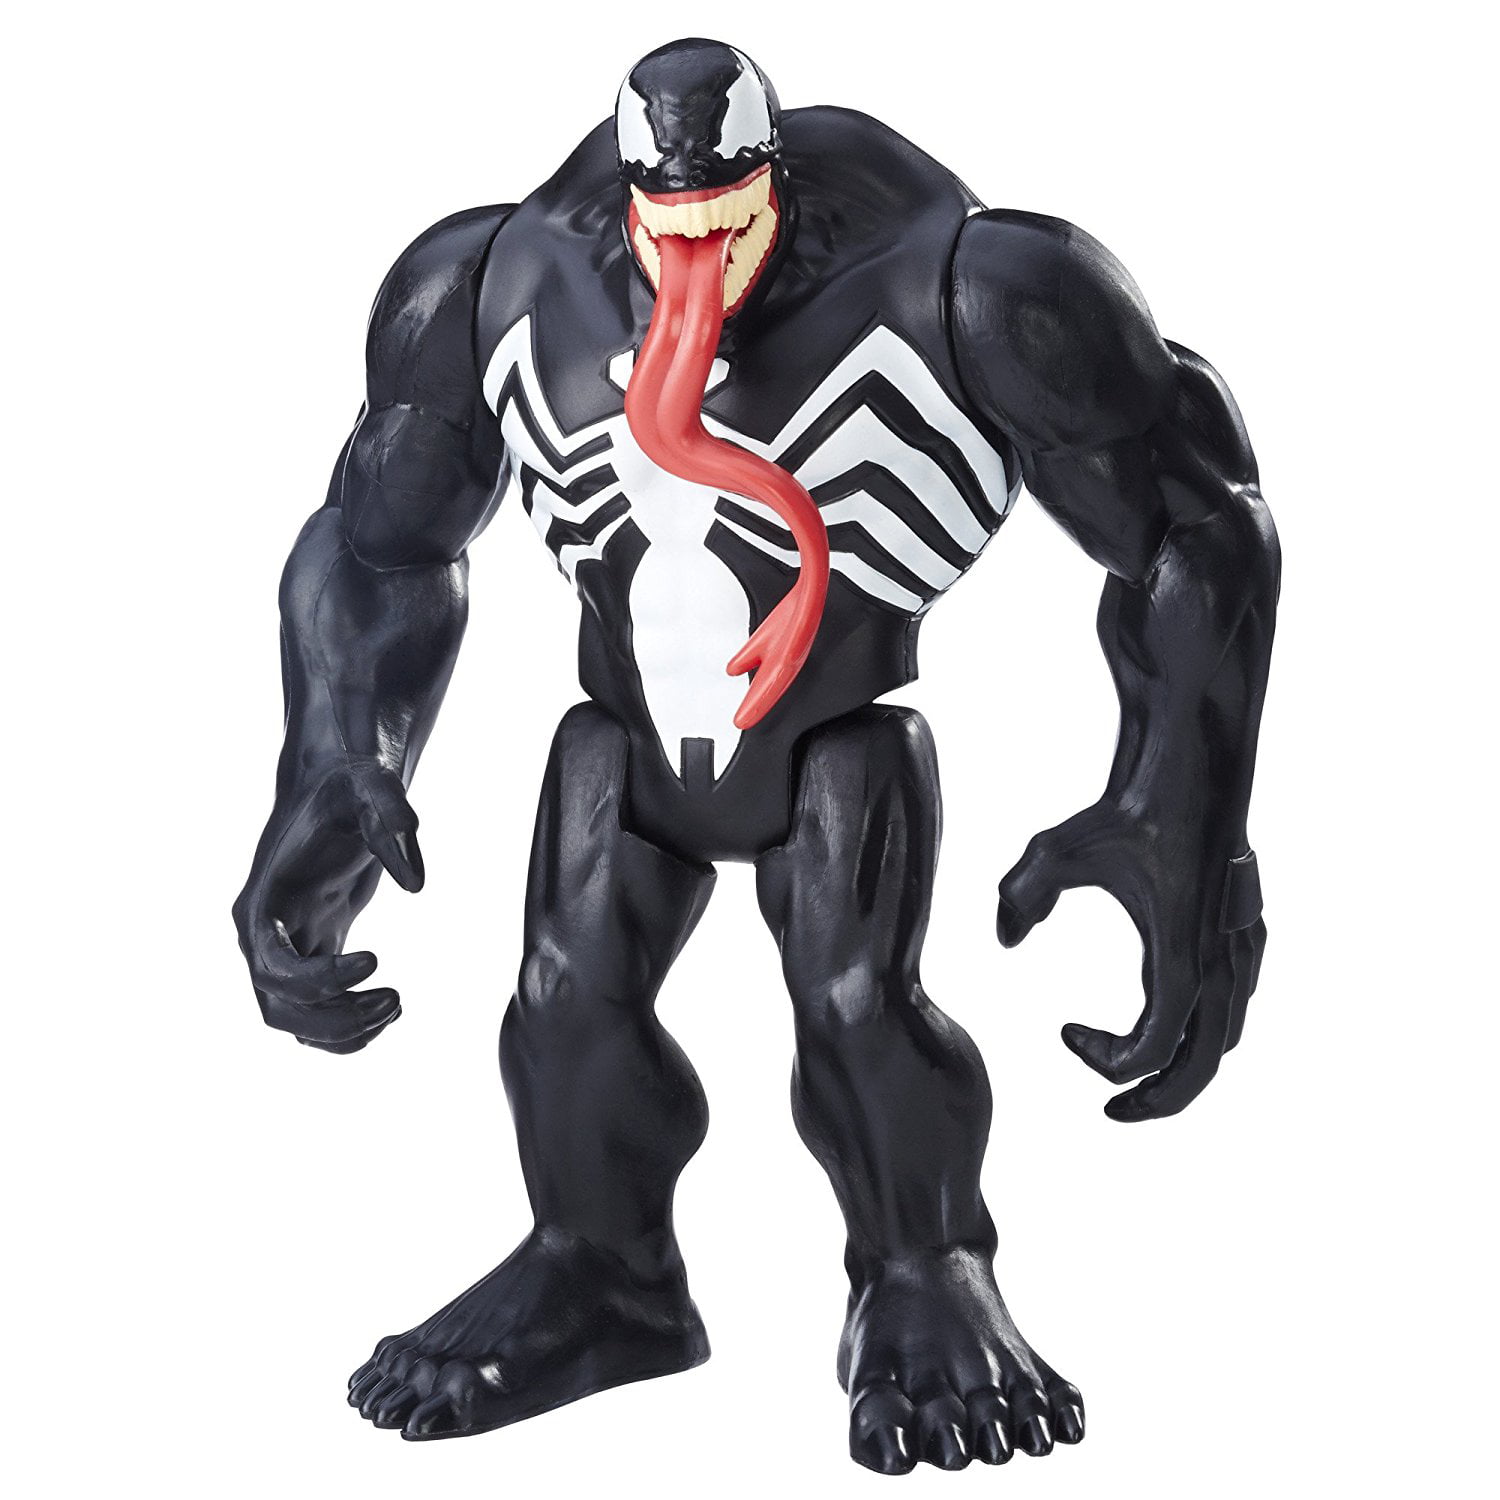 6 inch venom action figure. 